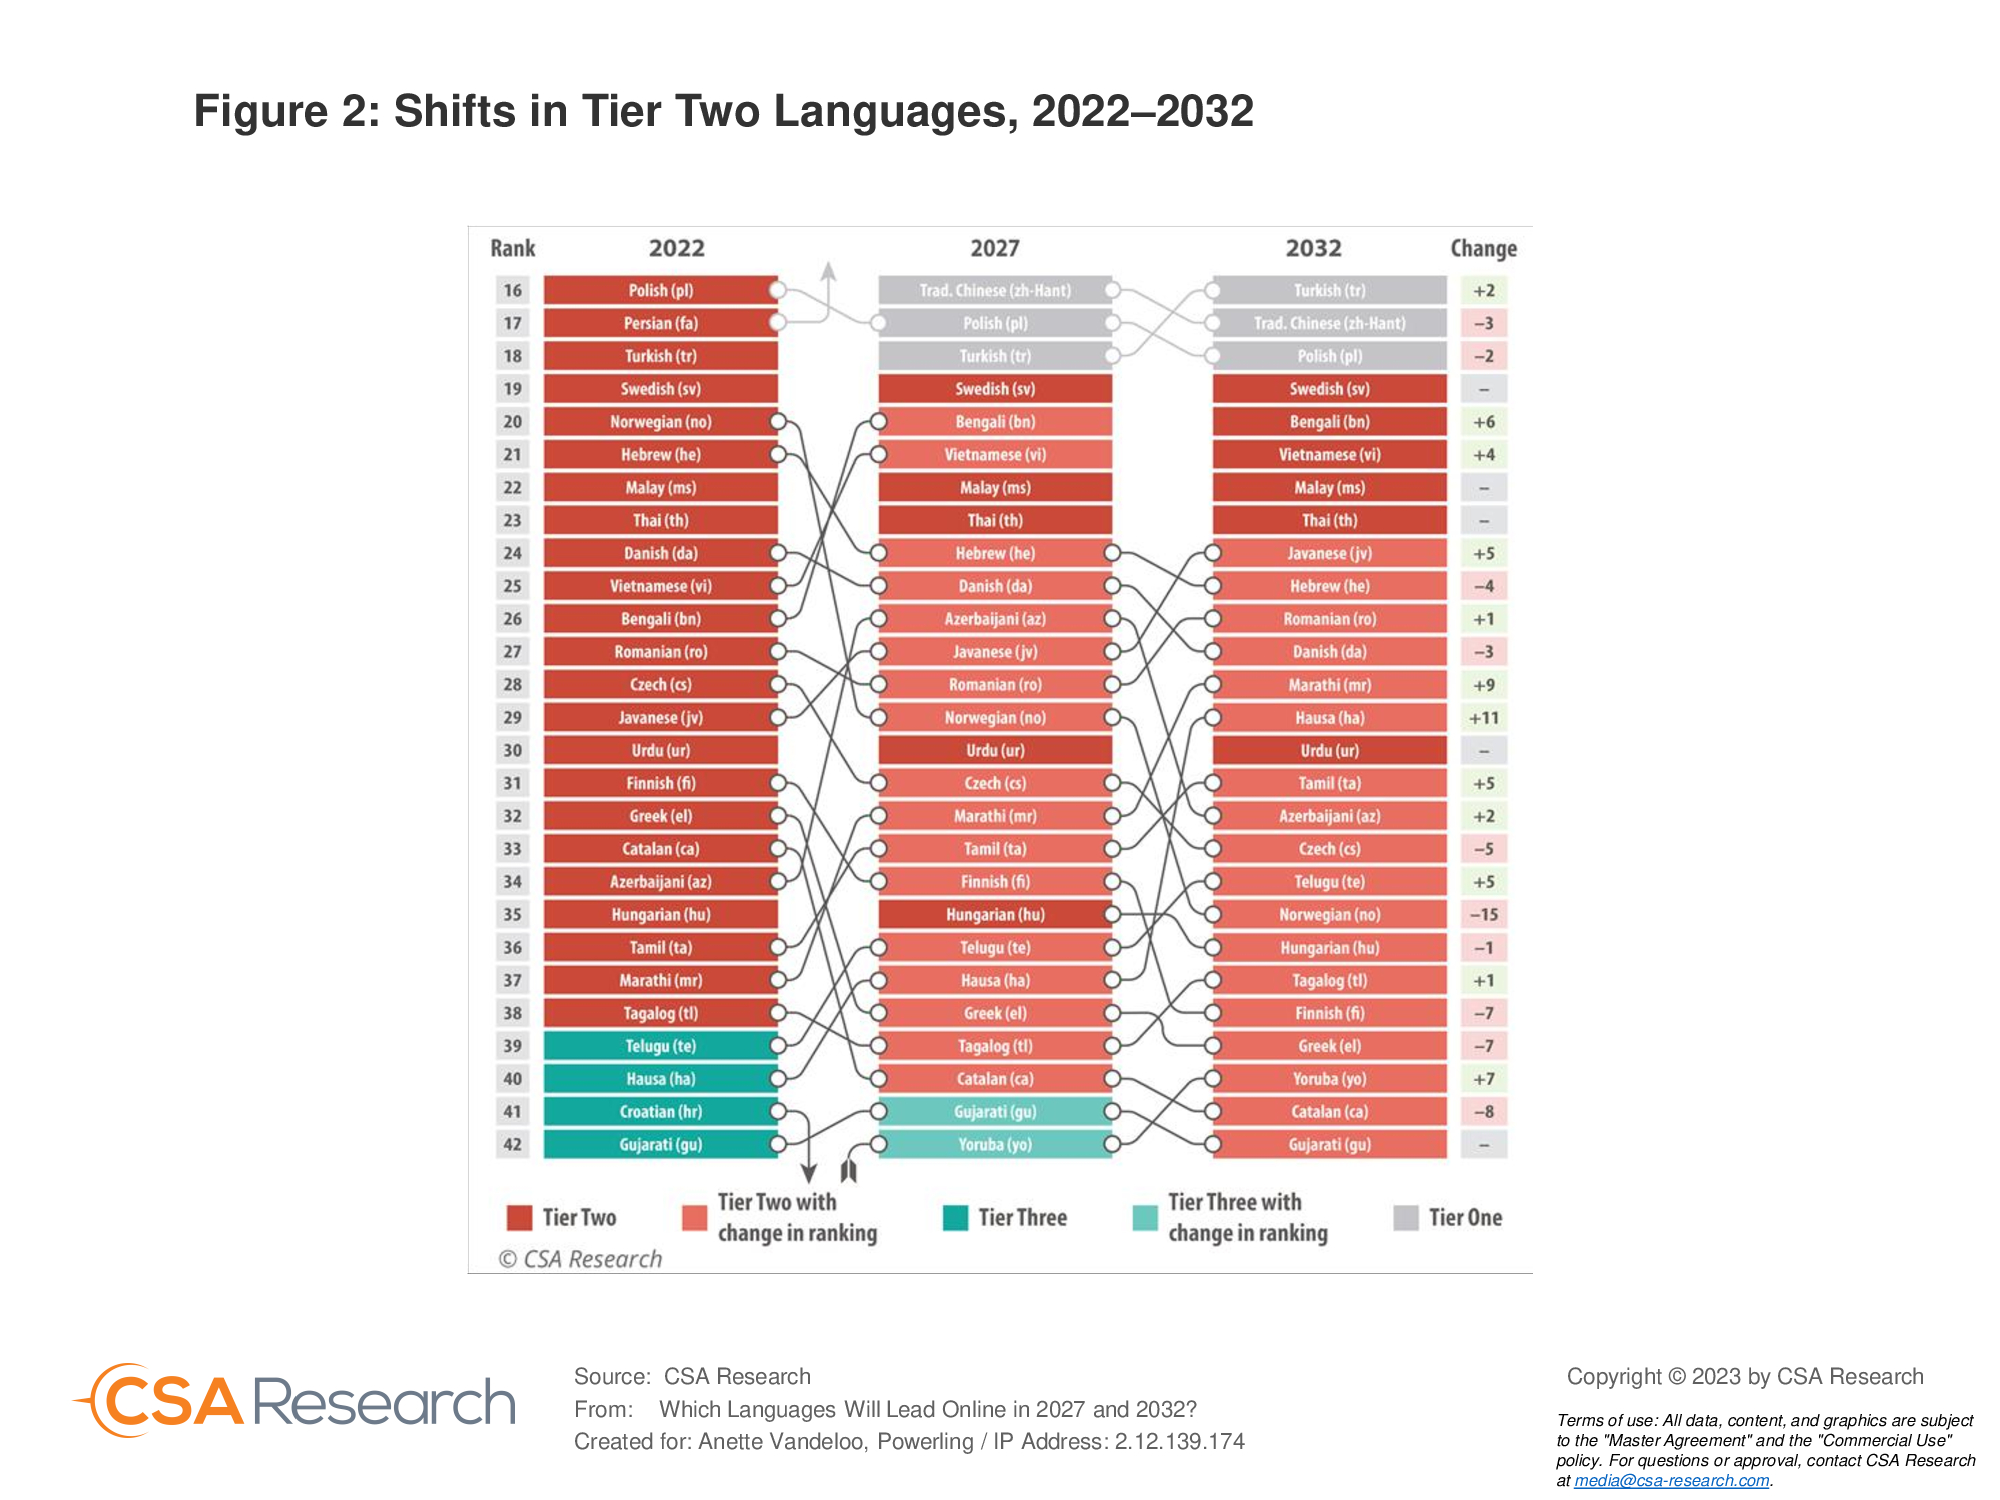 Languages that lead online stats